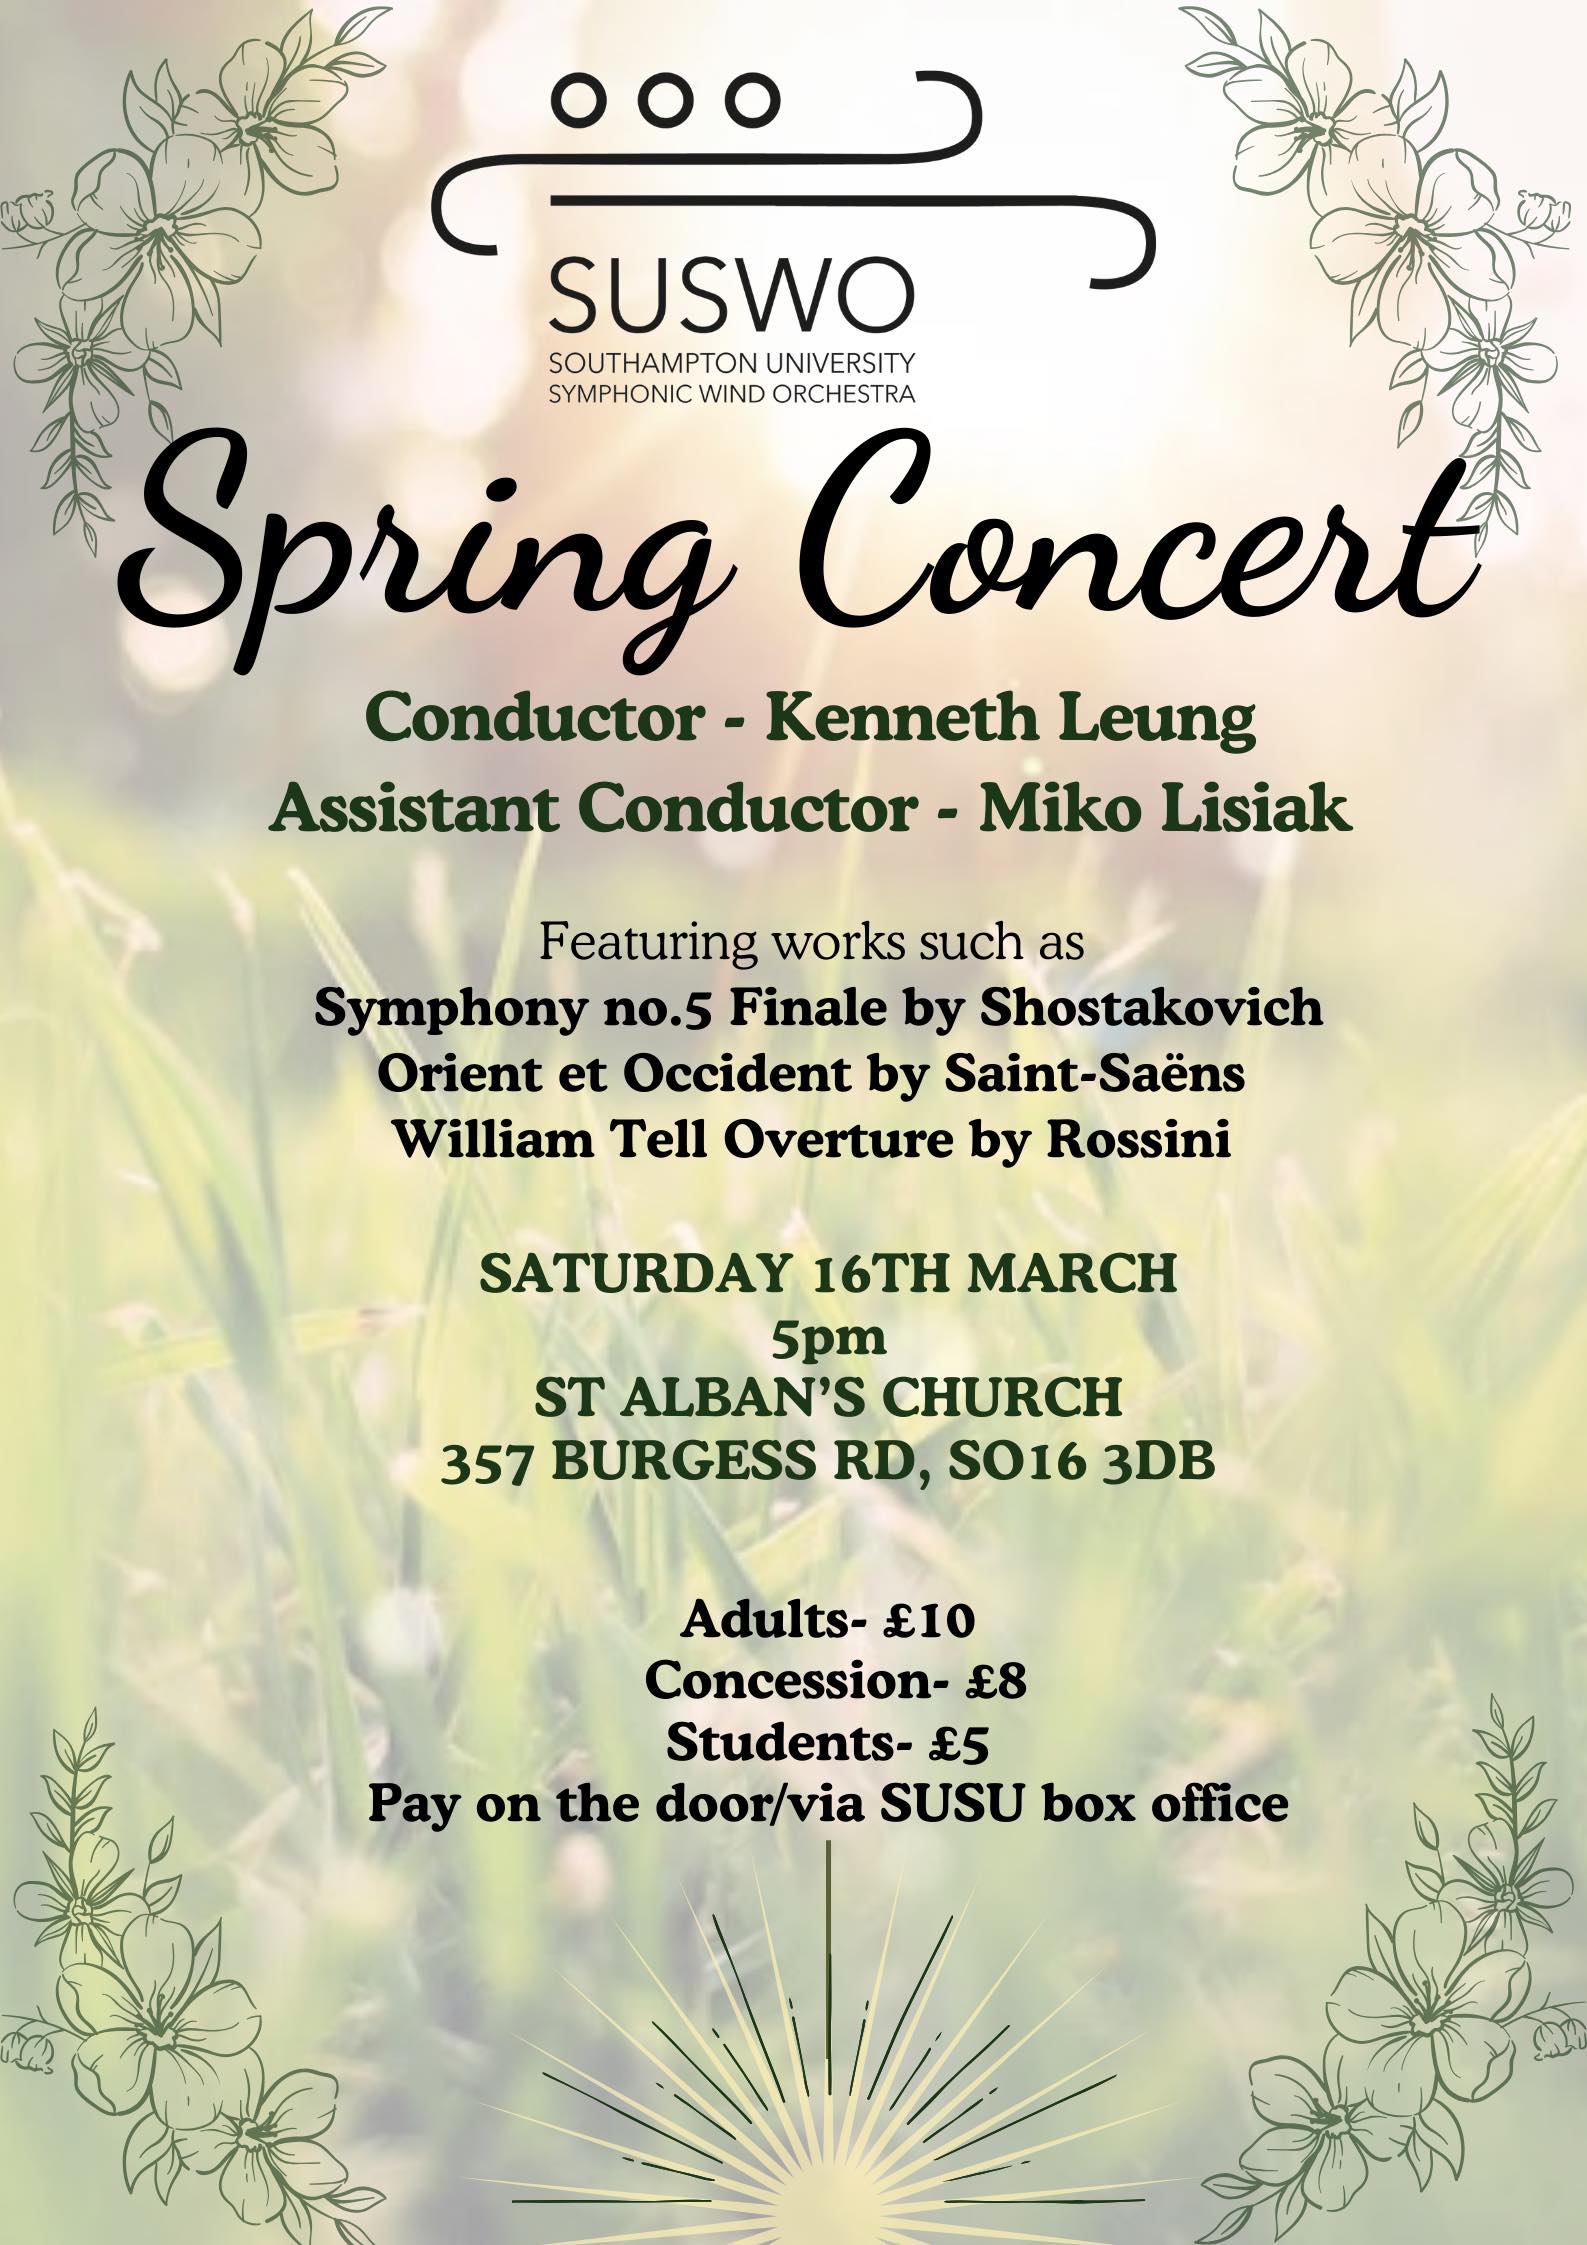 Southampton University Symphonic Wind Orchestra Spring Concert